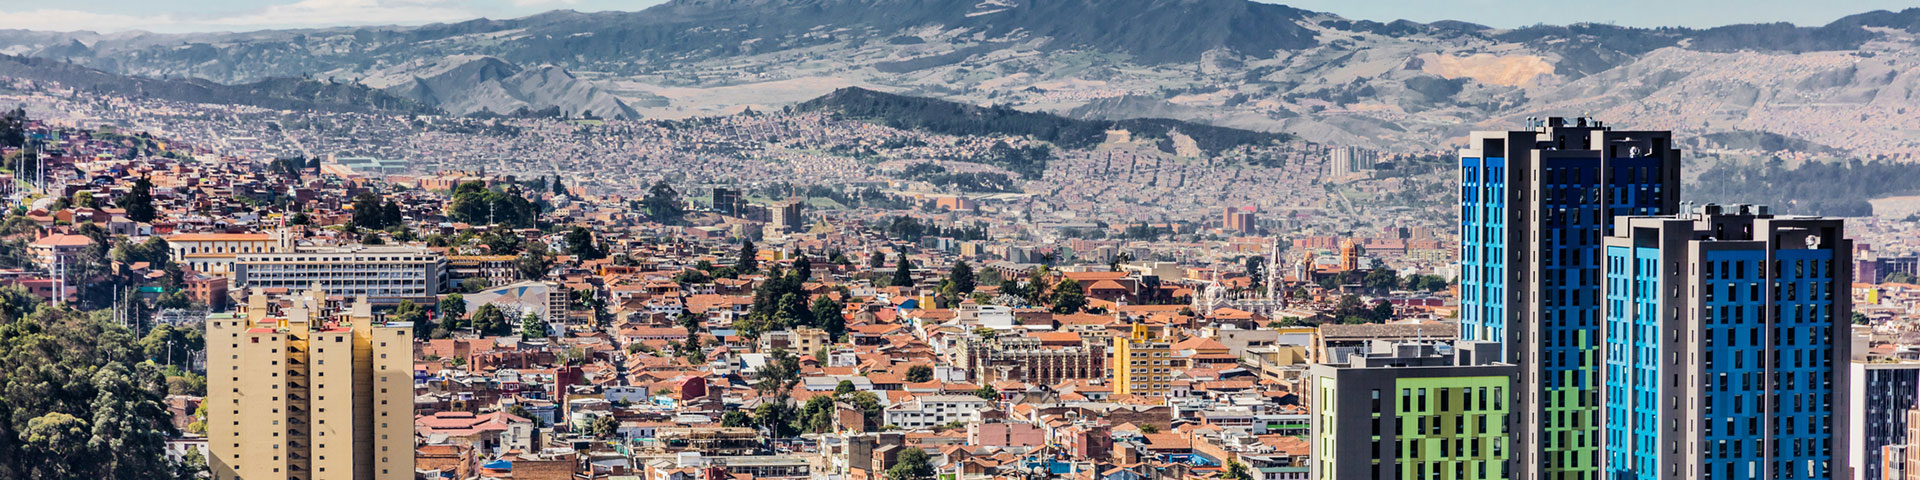 Aerial view of Bogotá.